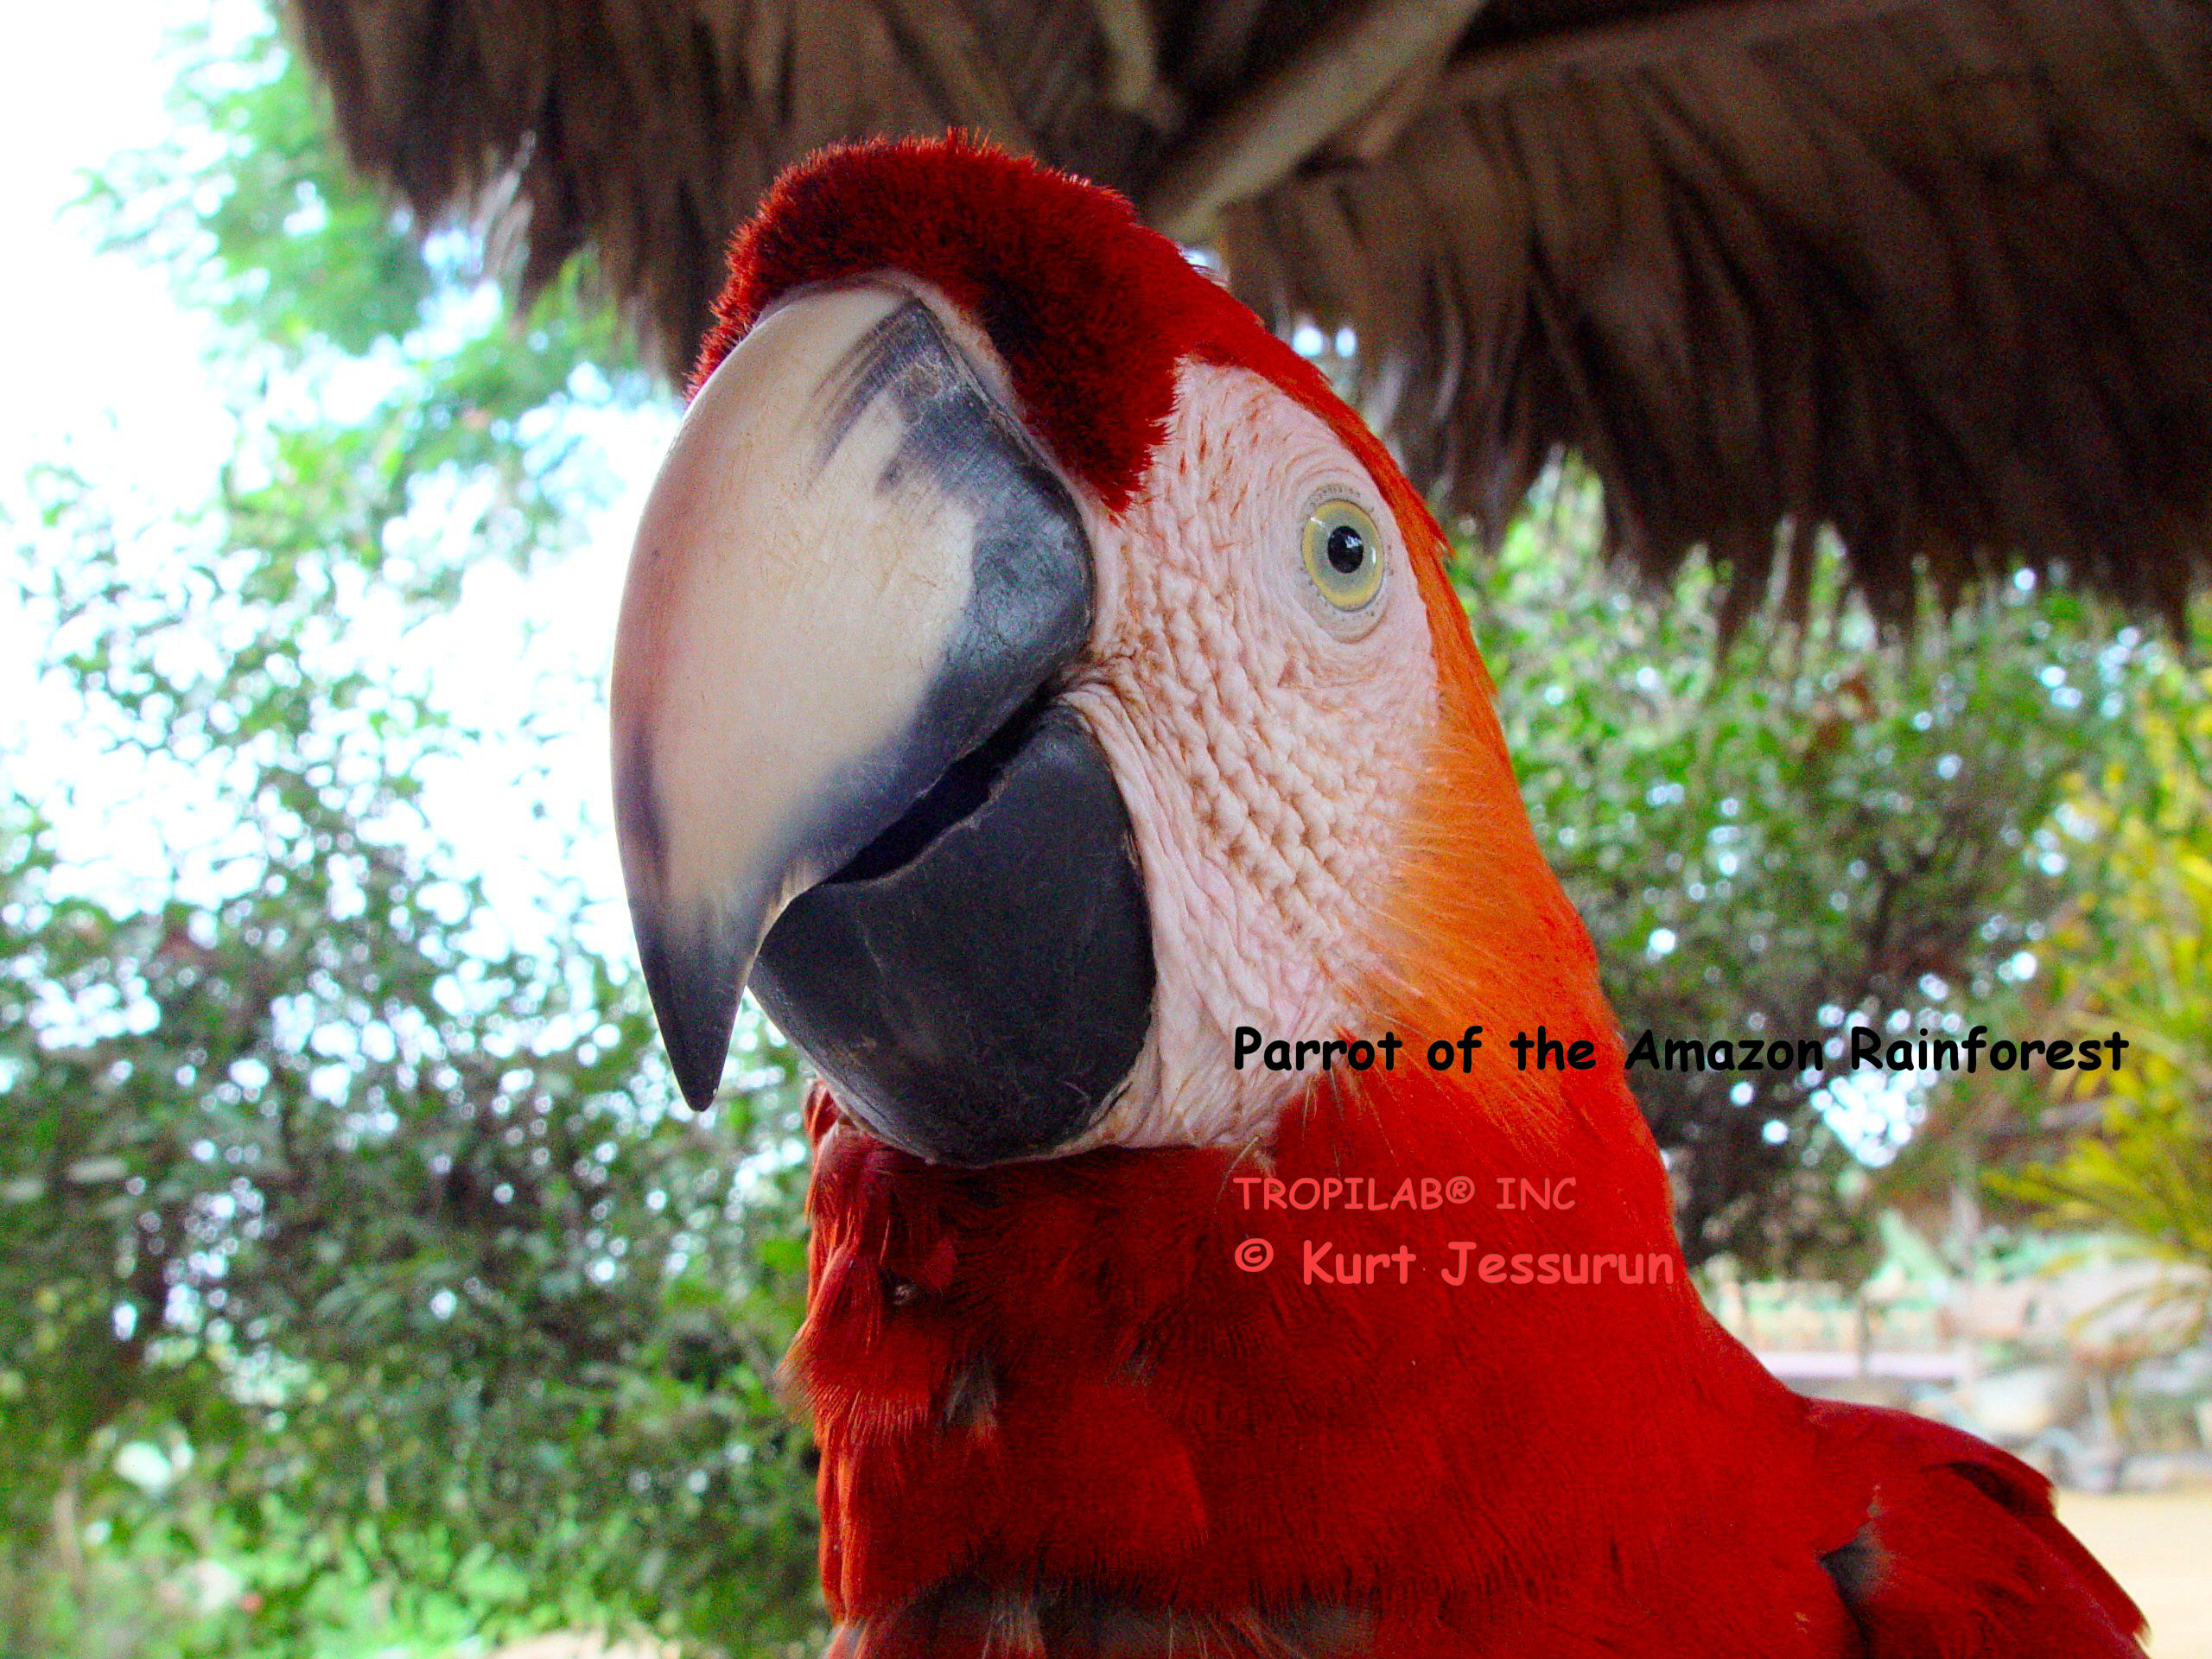 Parrot of the Amazon Rainforest